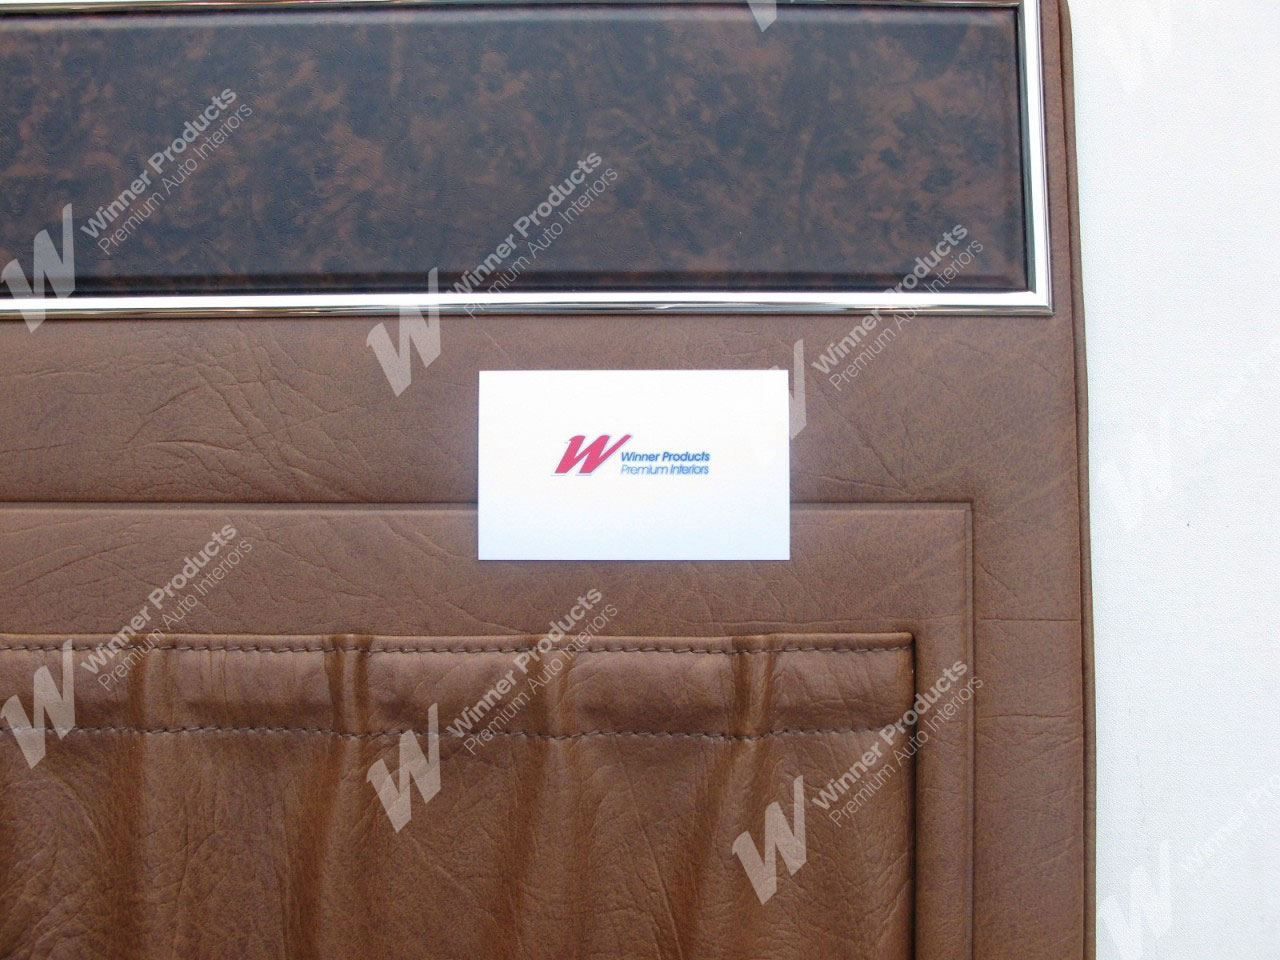 Holden Statesman HQ Statesman Deville 73-74 39M Chestnut Seat Back Boards (Image 2 of 2)